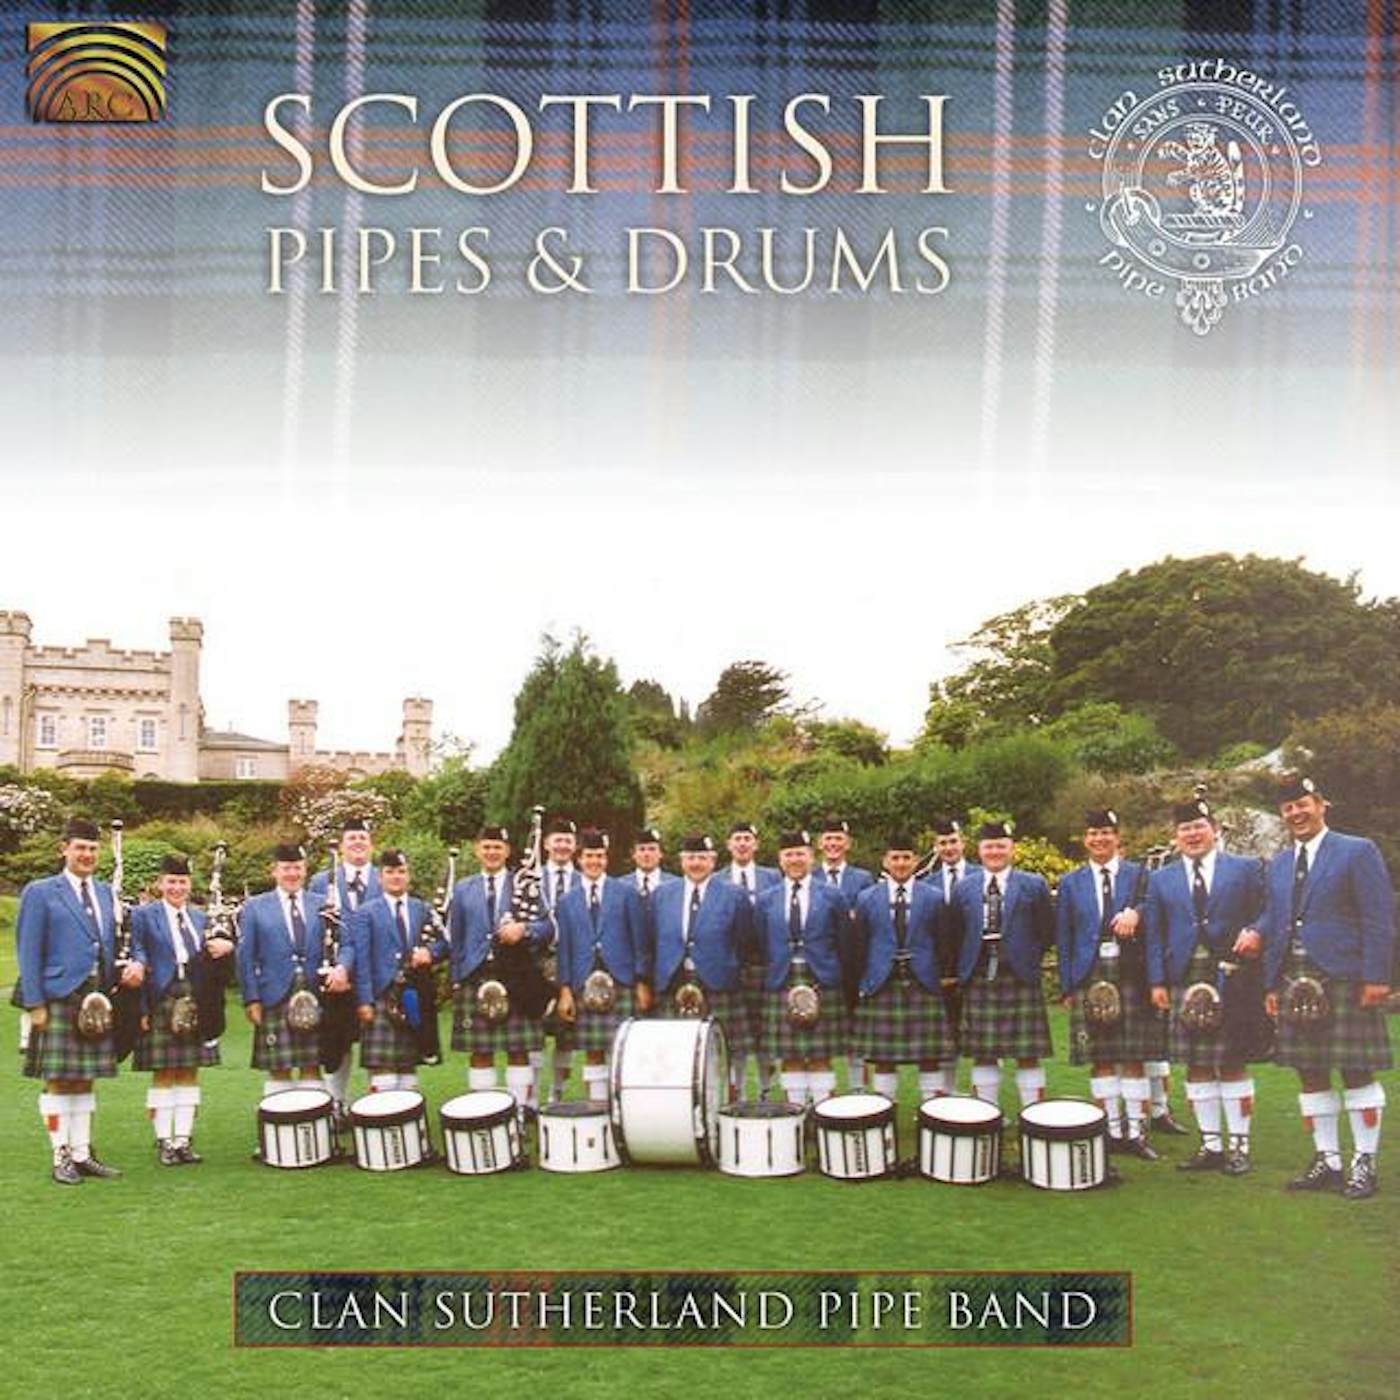 Clan Sutherland Pipe Band